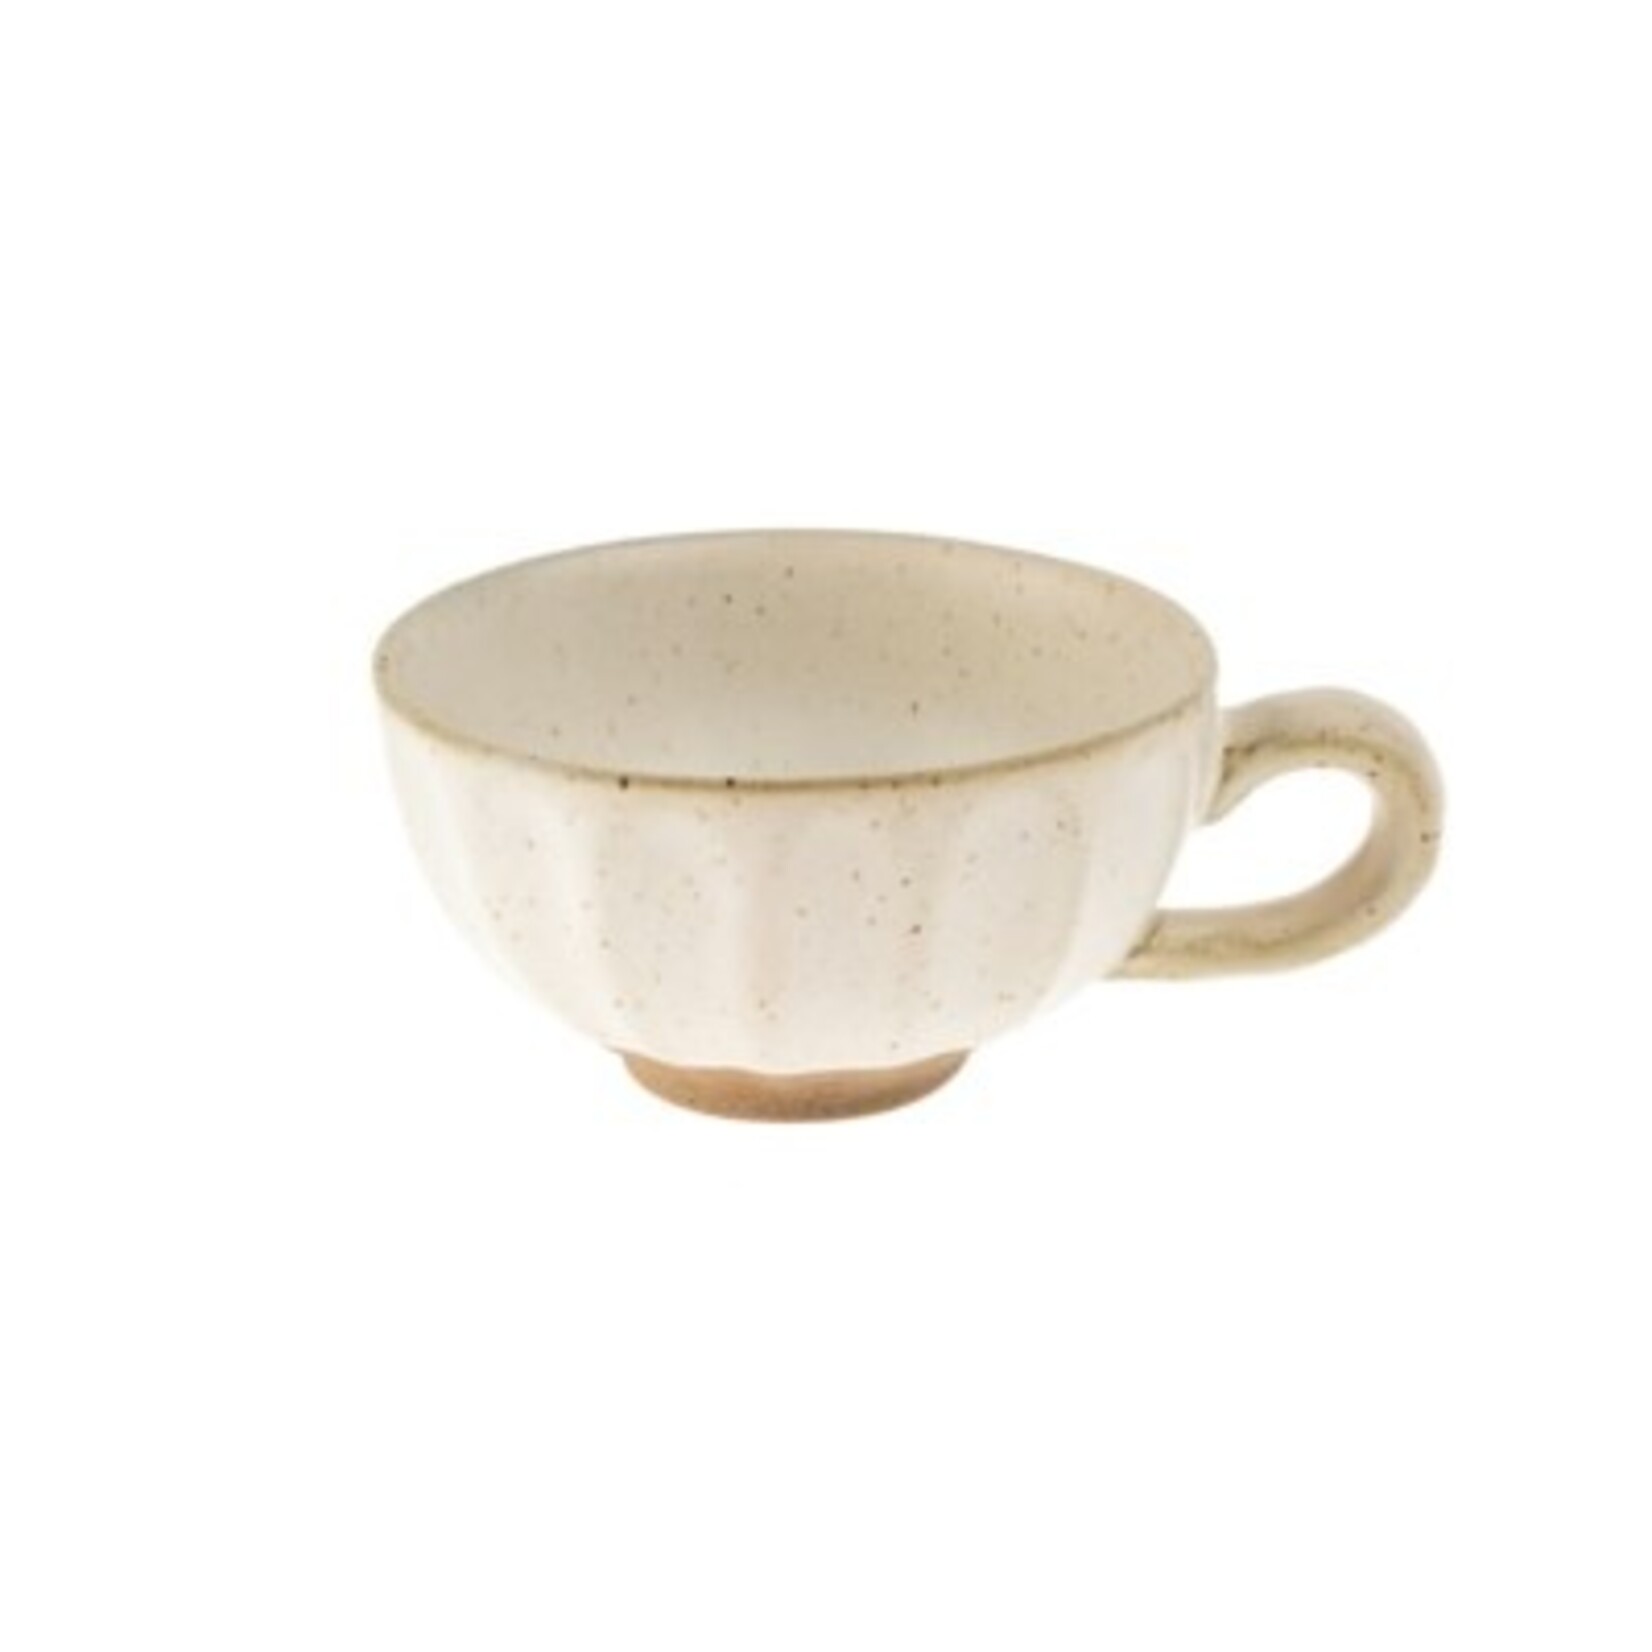 Indaba Trading Ltd. Artisano Cappuccino Cup